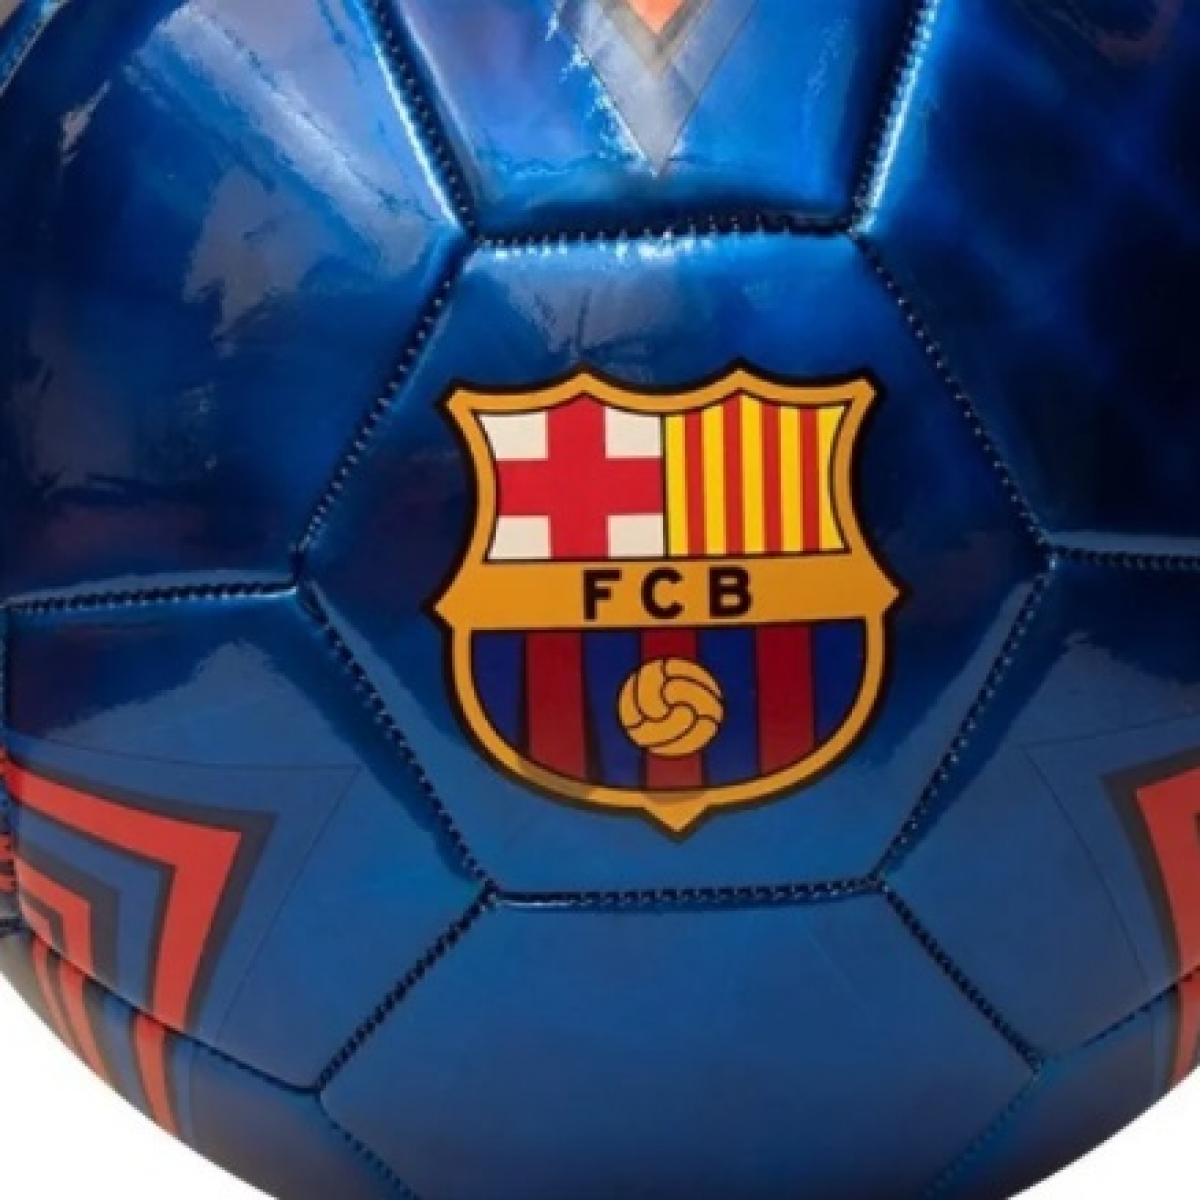 Balón Oficial FC Barcelona Futbol Brillante